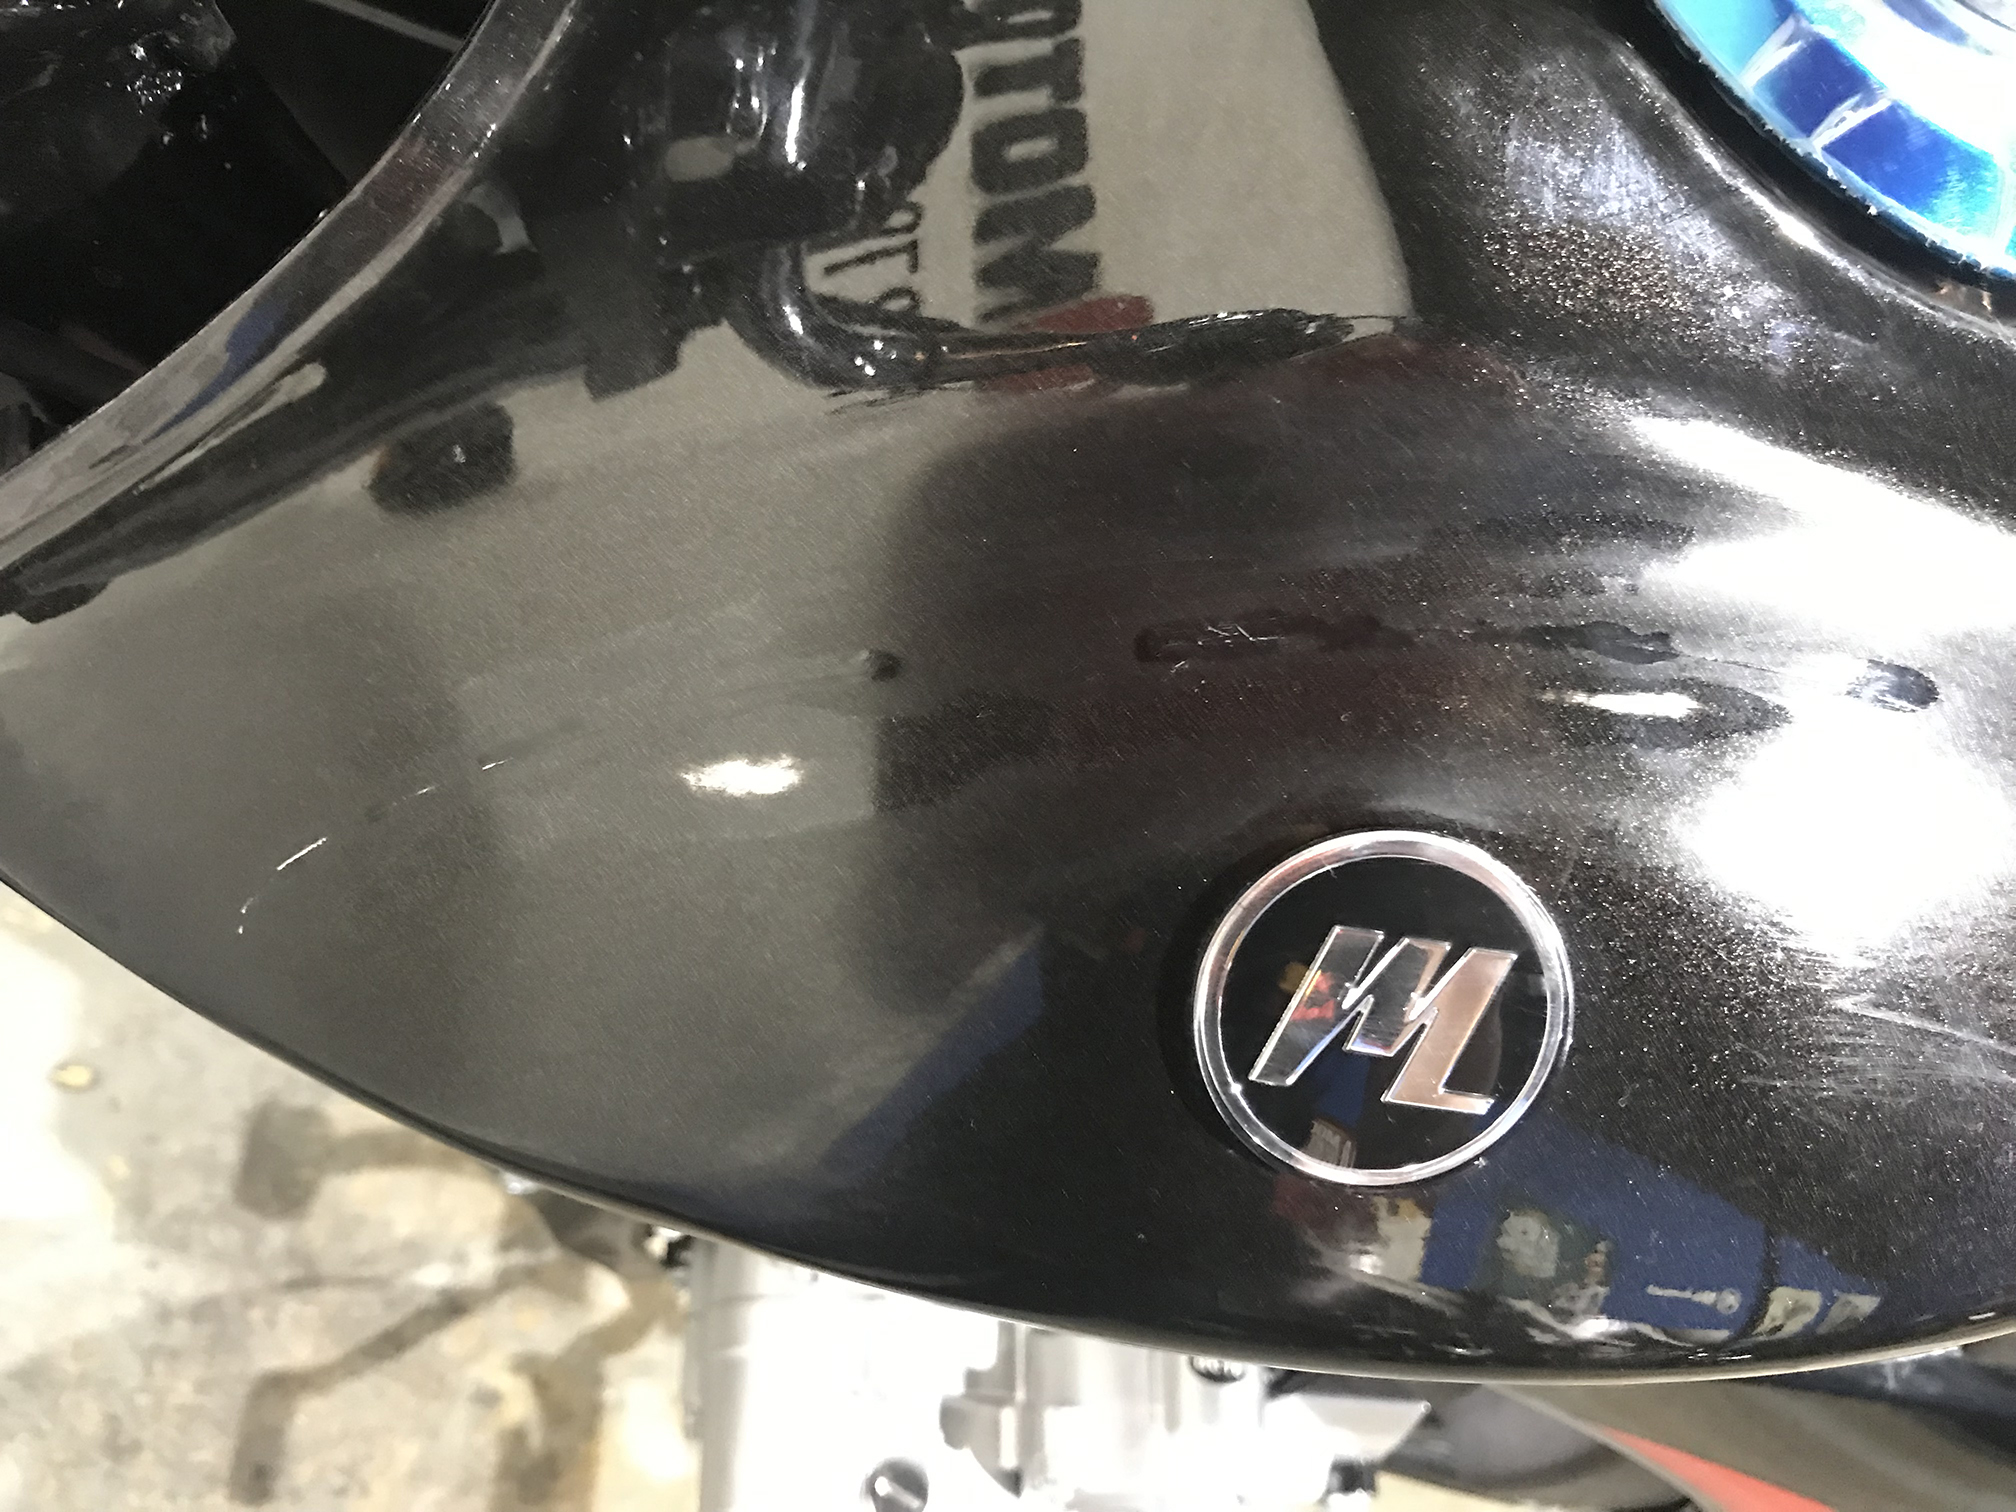 Moto Motomel CG 150 S2 Full linea 2019 OUTLET int: 18340